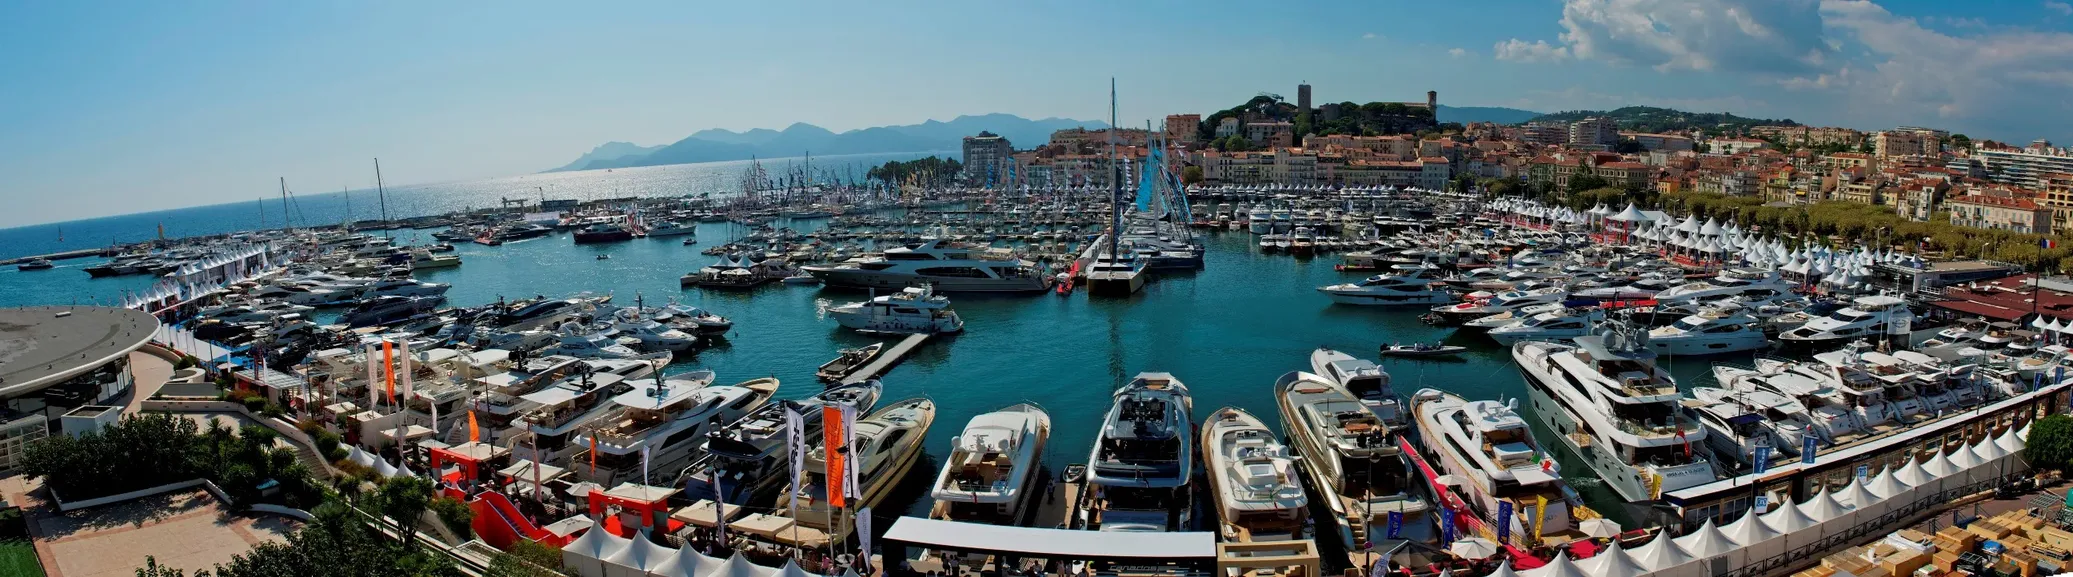 Cannes | Provence-Alpes-Cote d'Azur Region, France - Rated 7.2